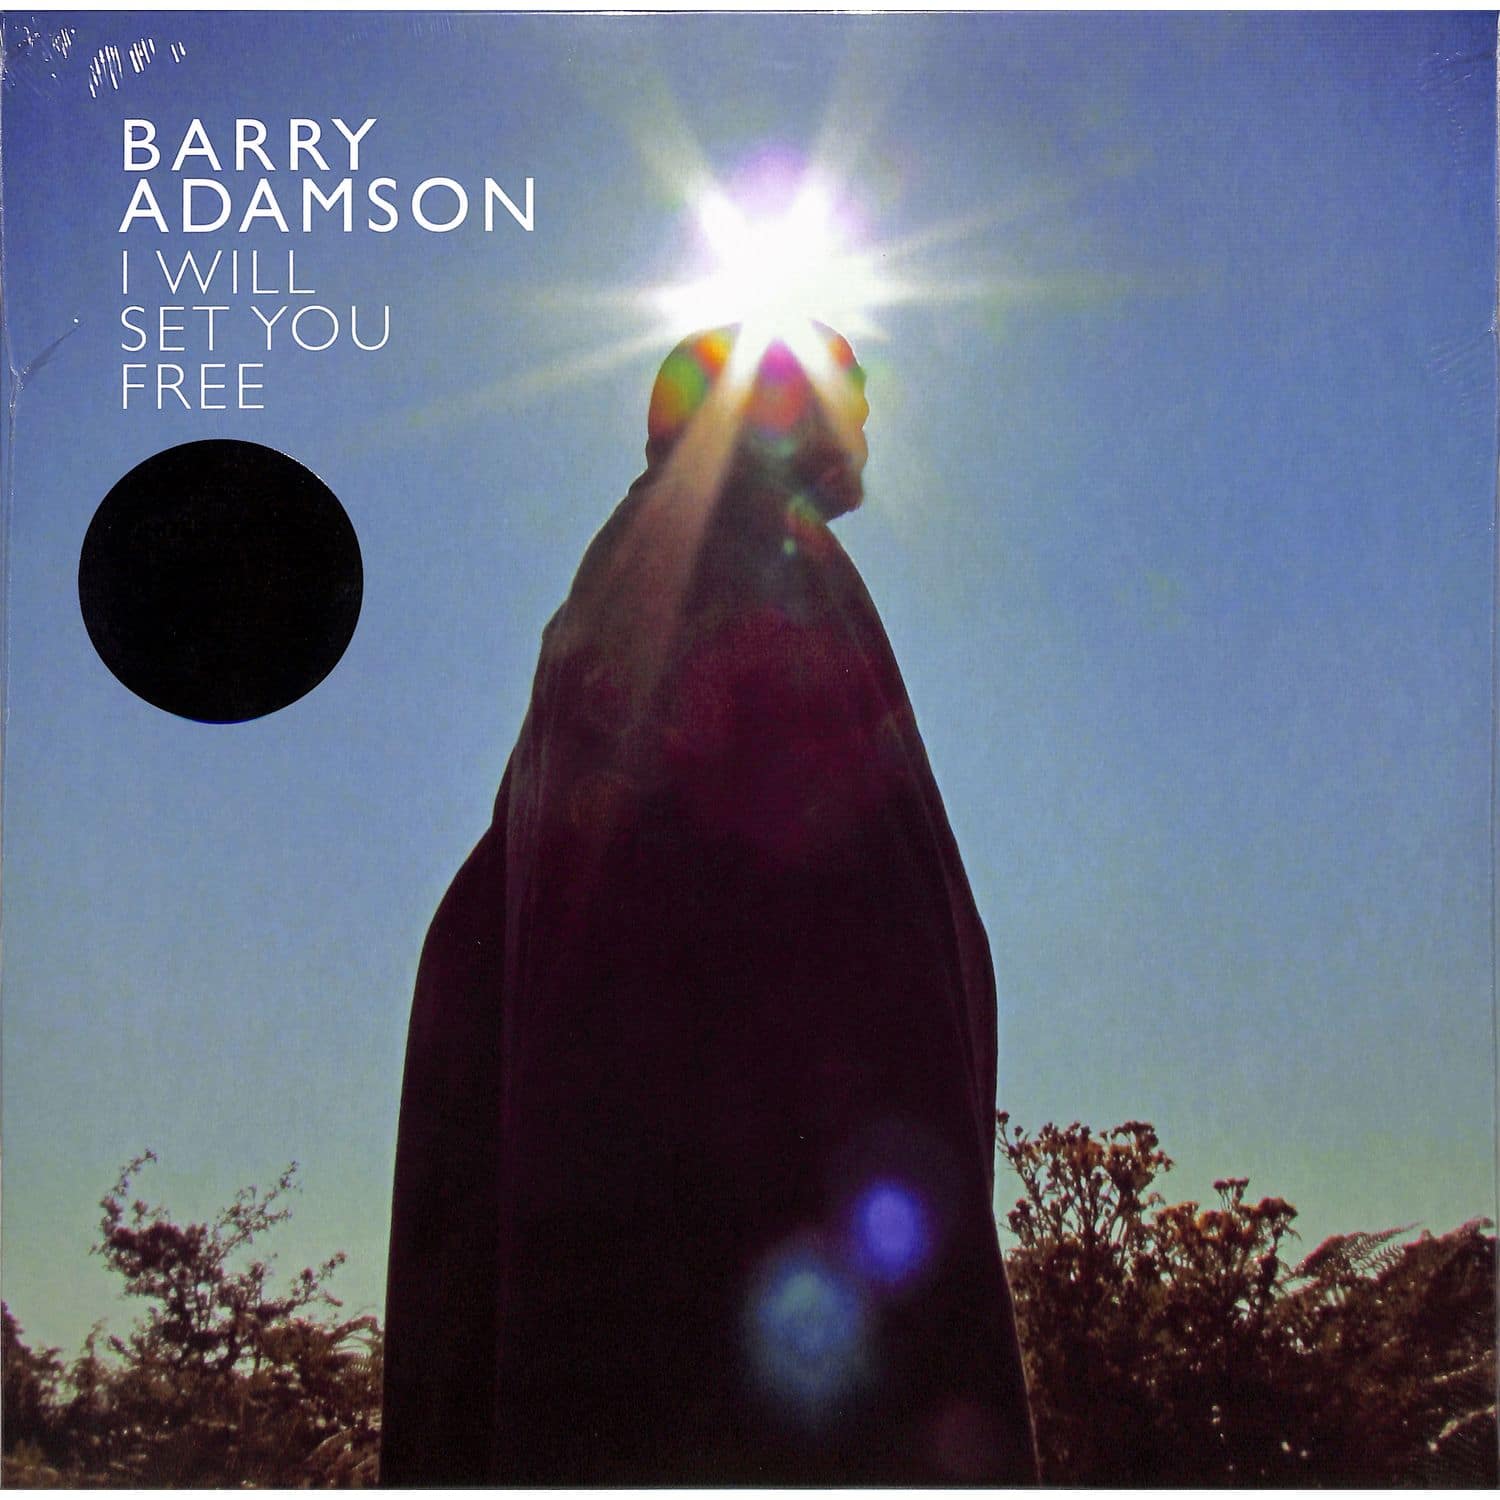  Barry Adamson - I WILL SET YOU FREE 